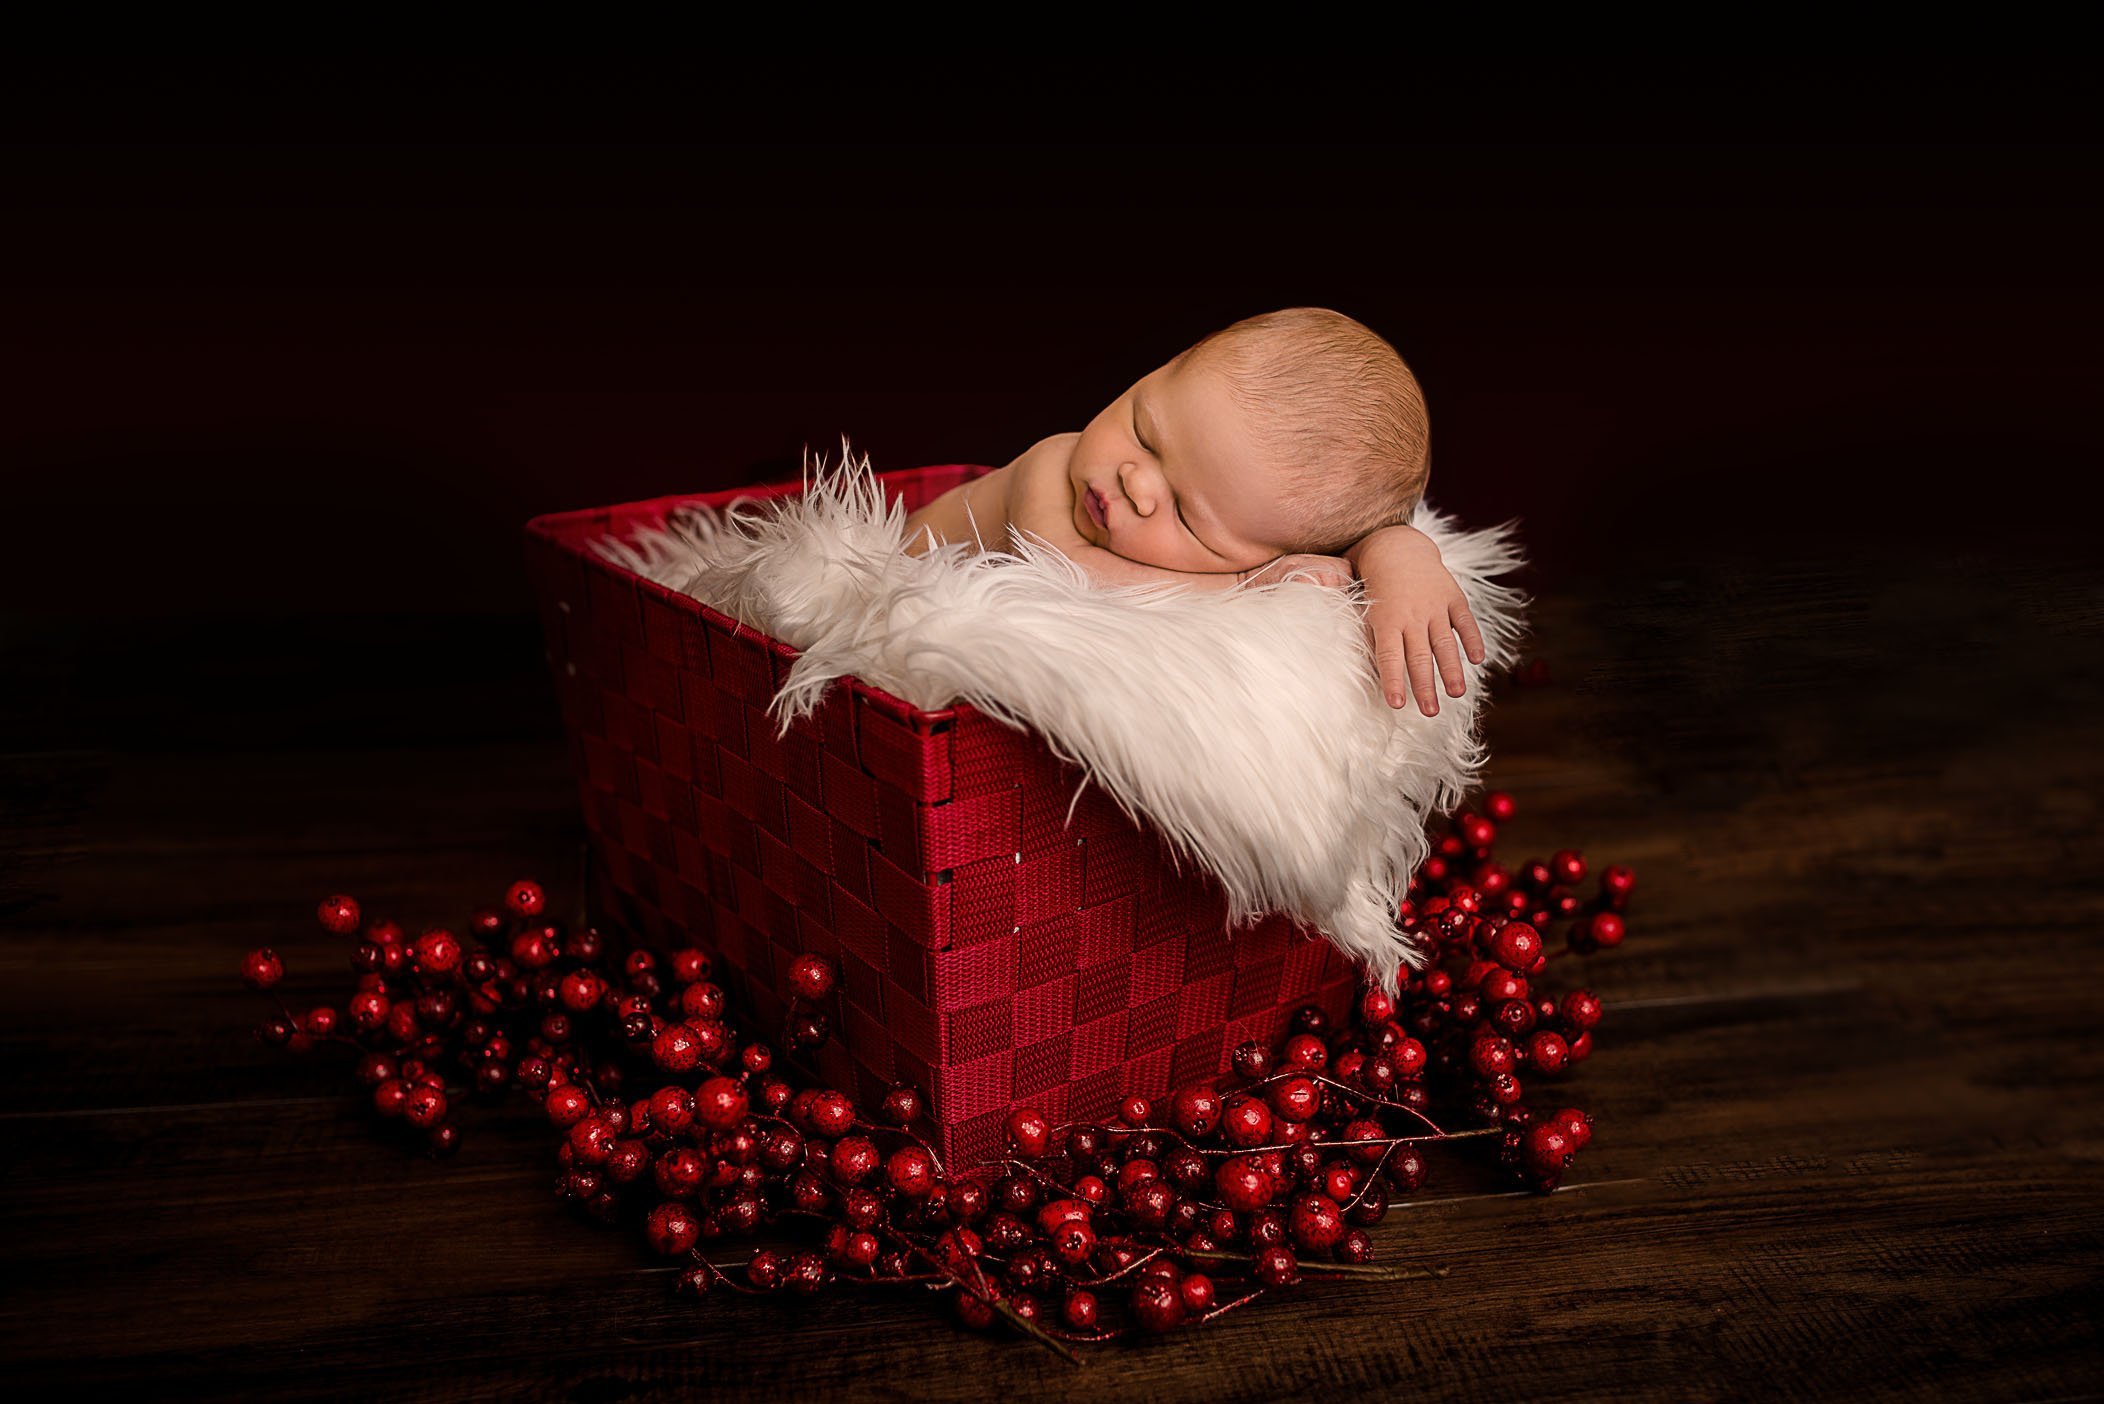 newborn baby sleeping in red basket on white fur with Christmas berries on floor